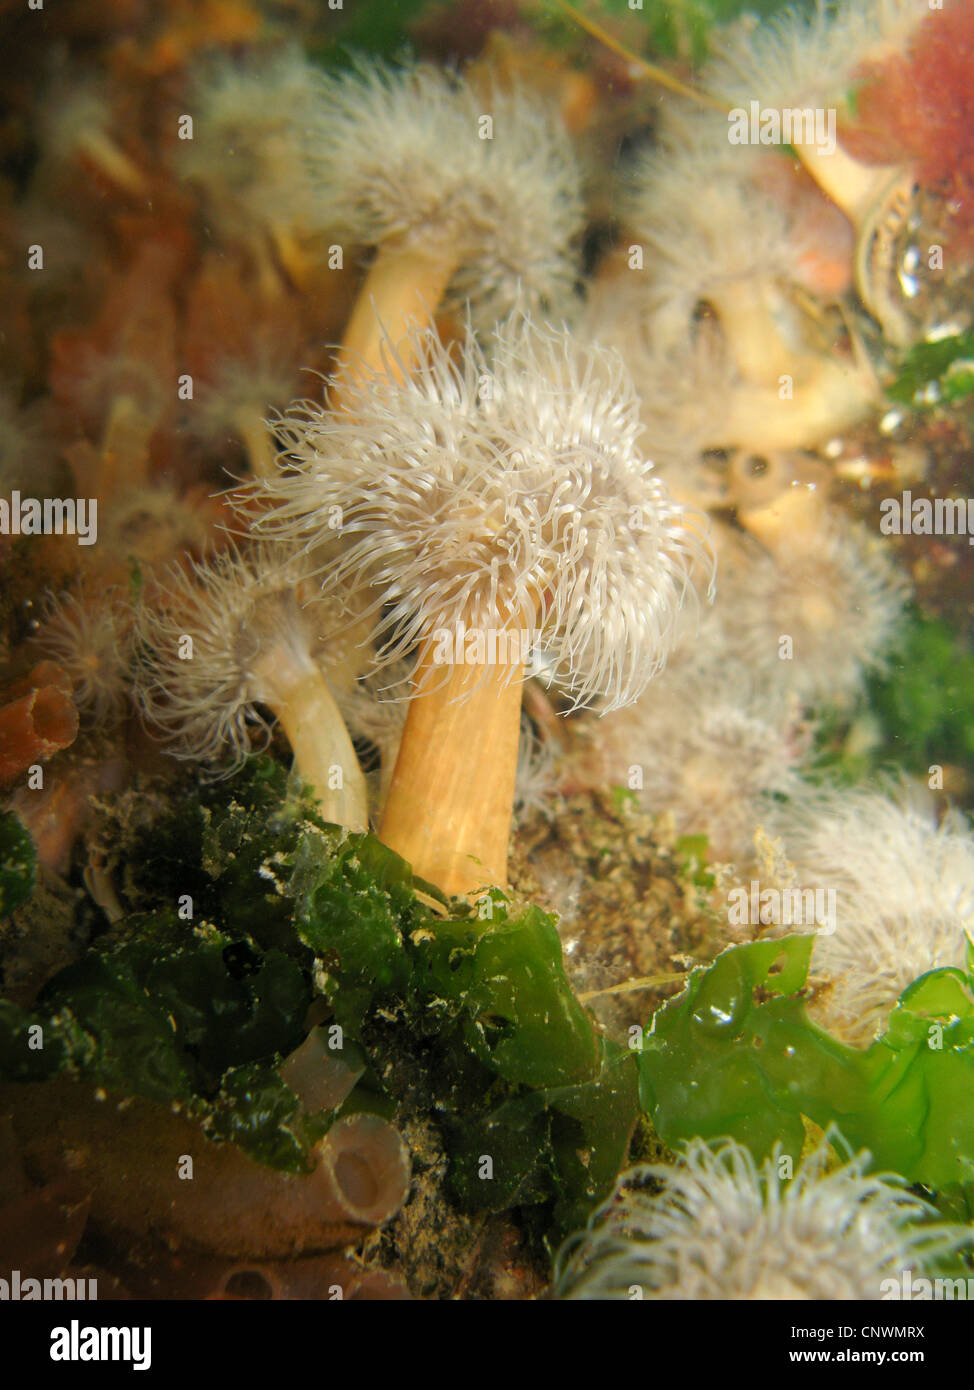 clonal plumose anemone, frilled anemone, plumose sea anemone, brown sea anemone, plumose anemone (Metridium senile), colony Stock Photo